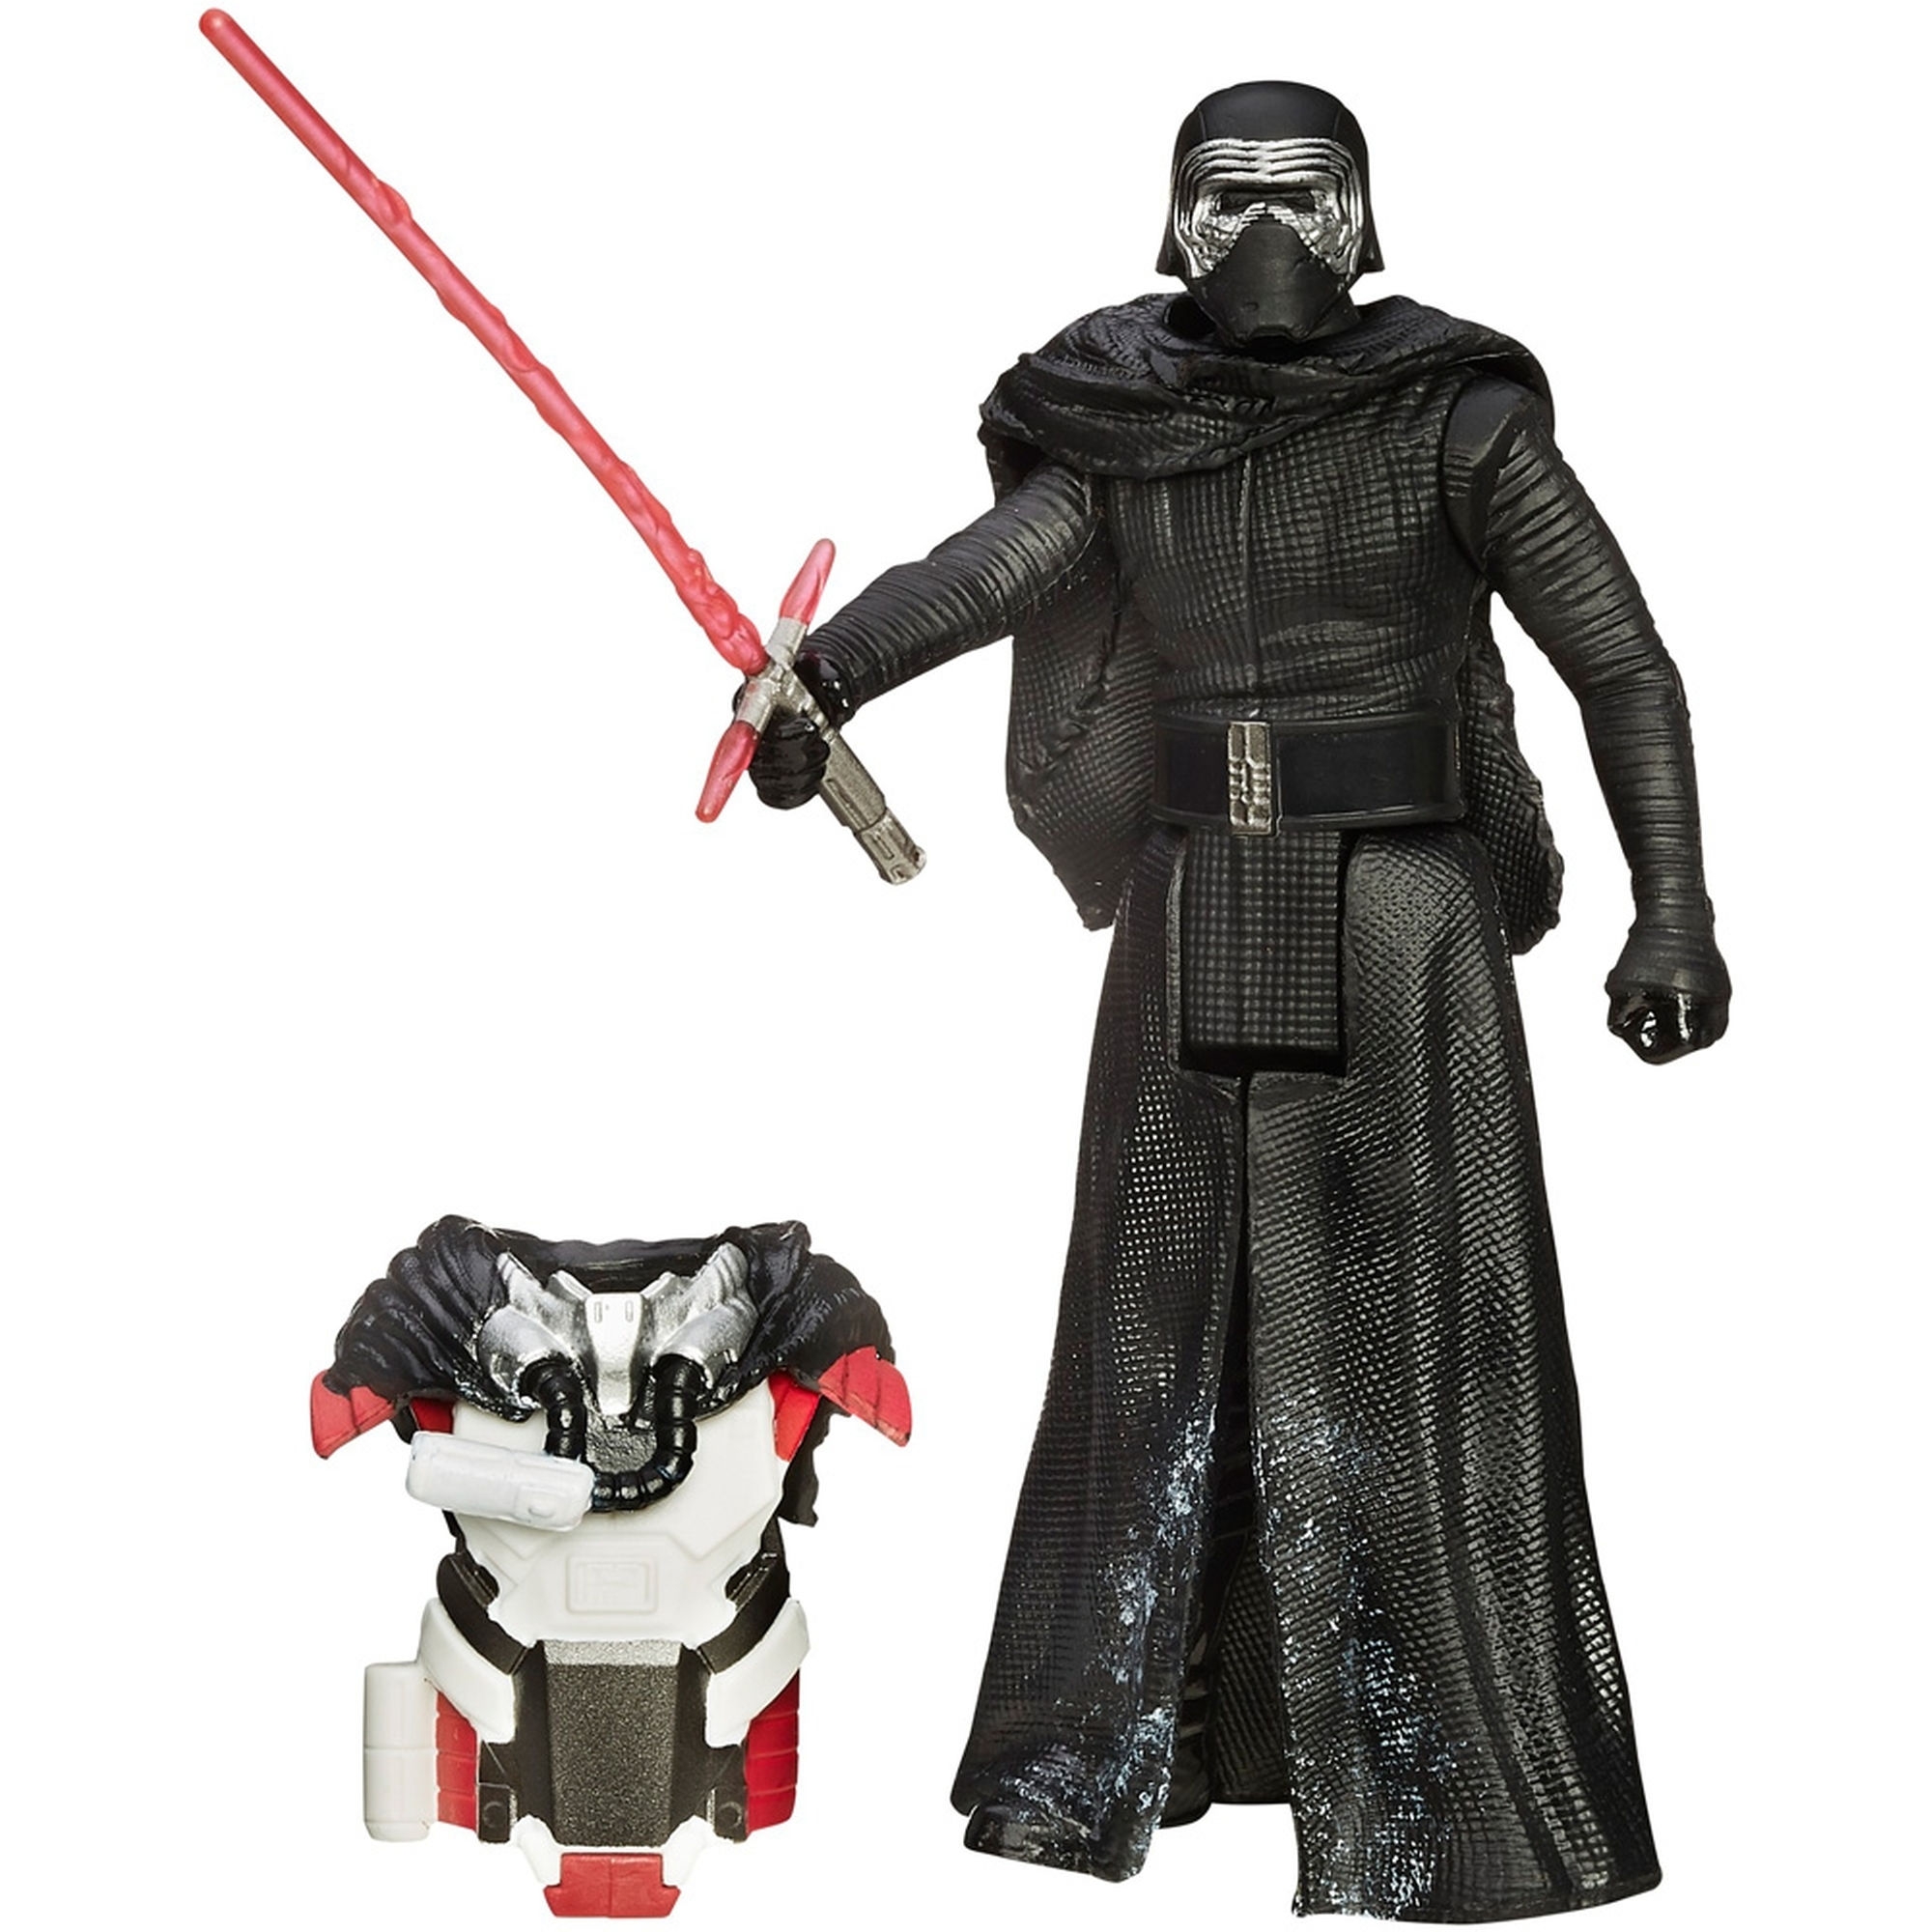 Disney Star Wars The Force Awakens 'Kylo Ren' Action Figure Toy